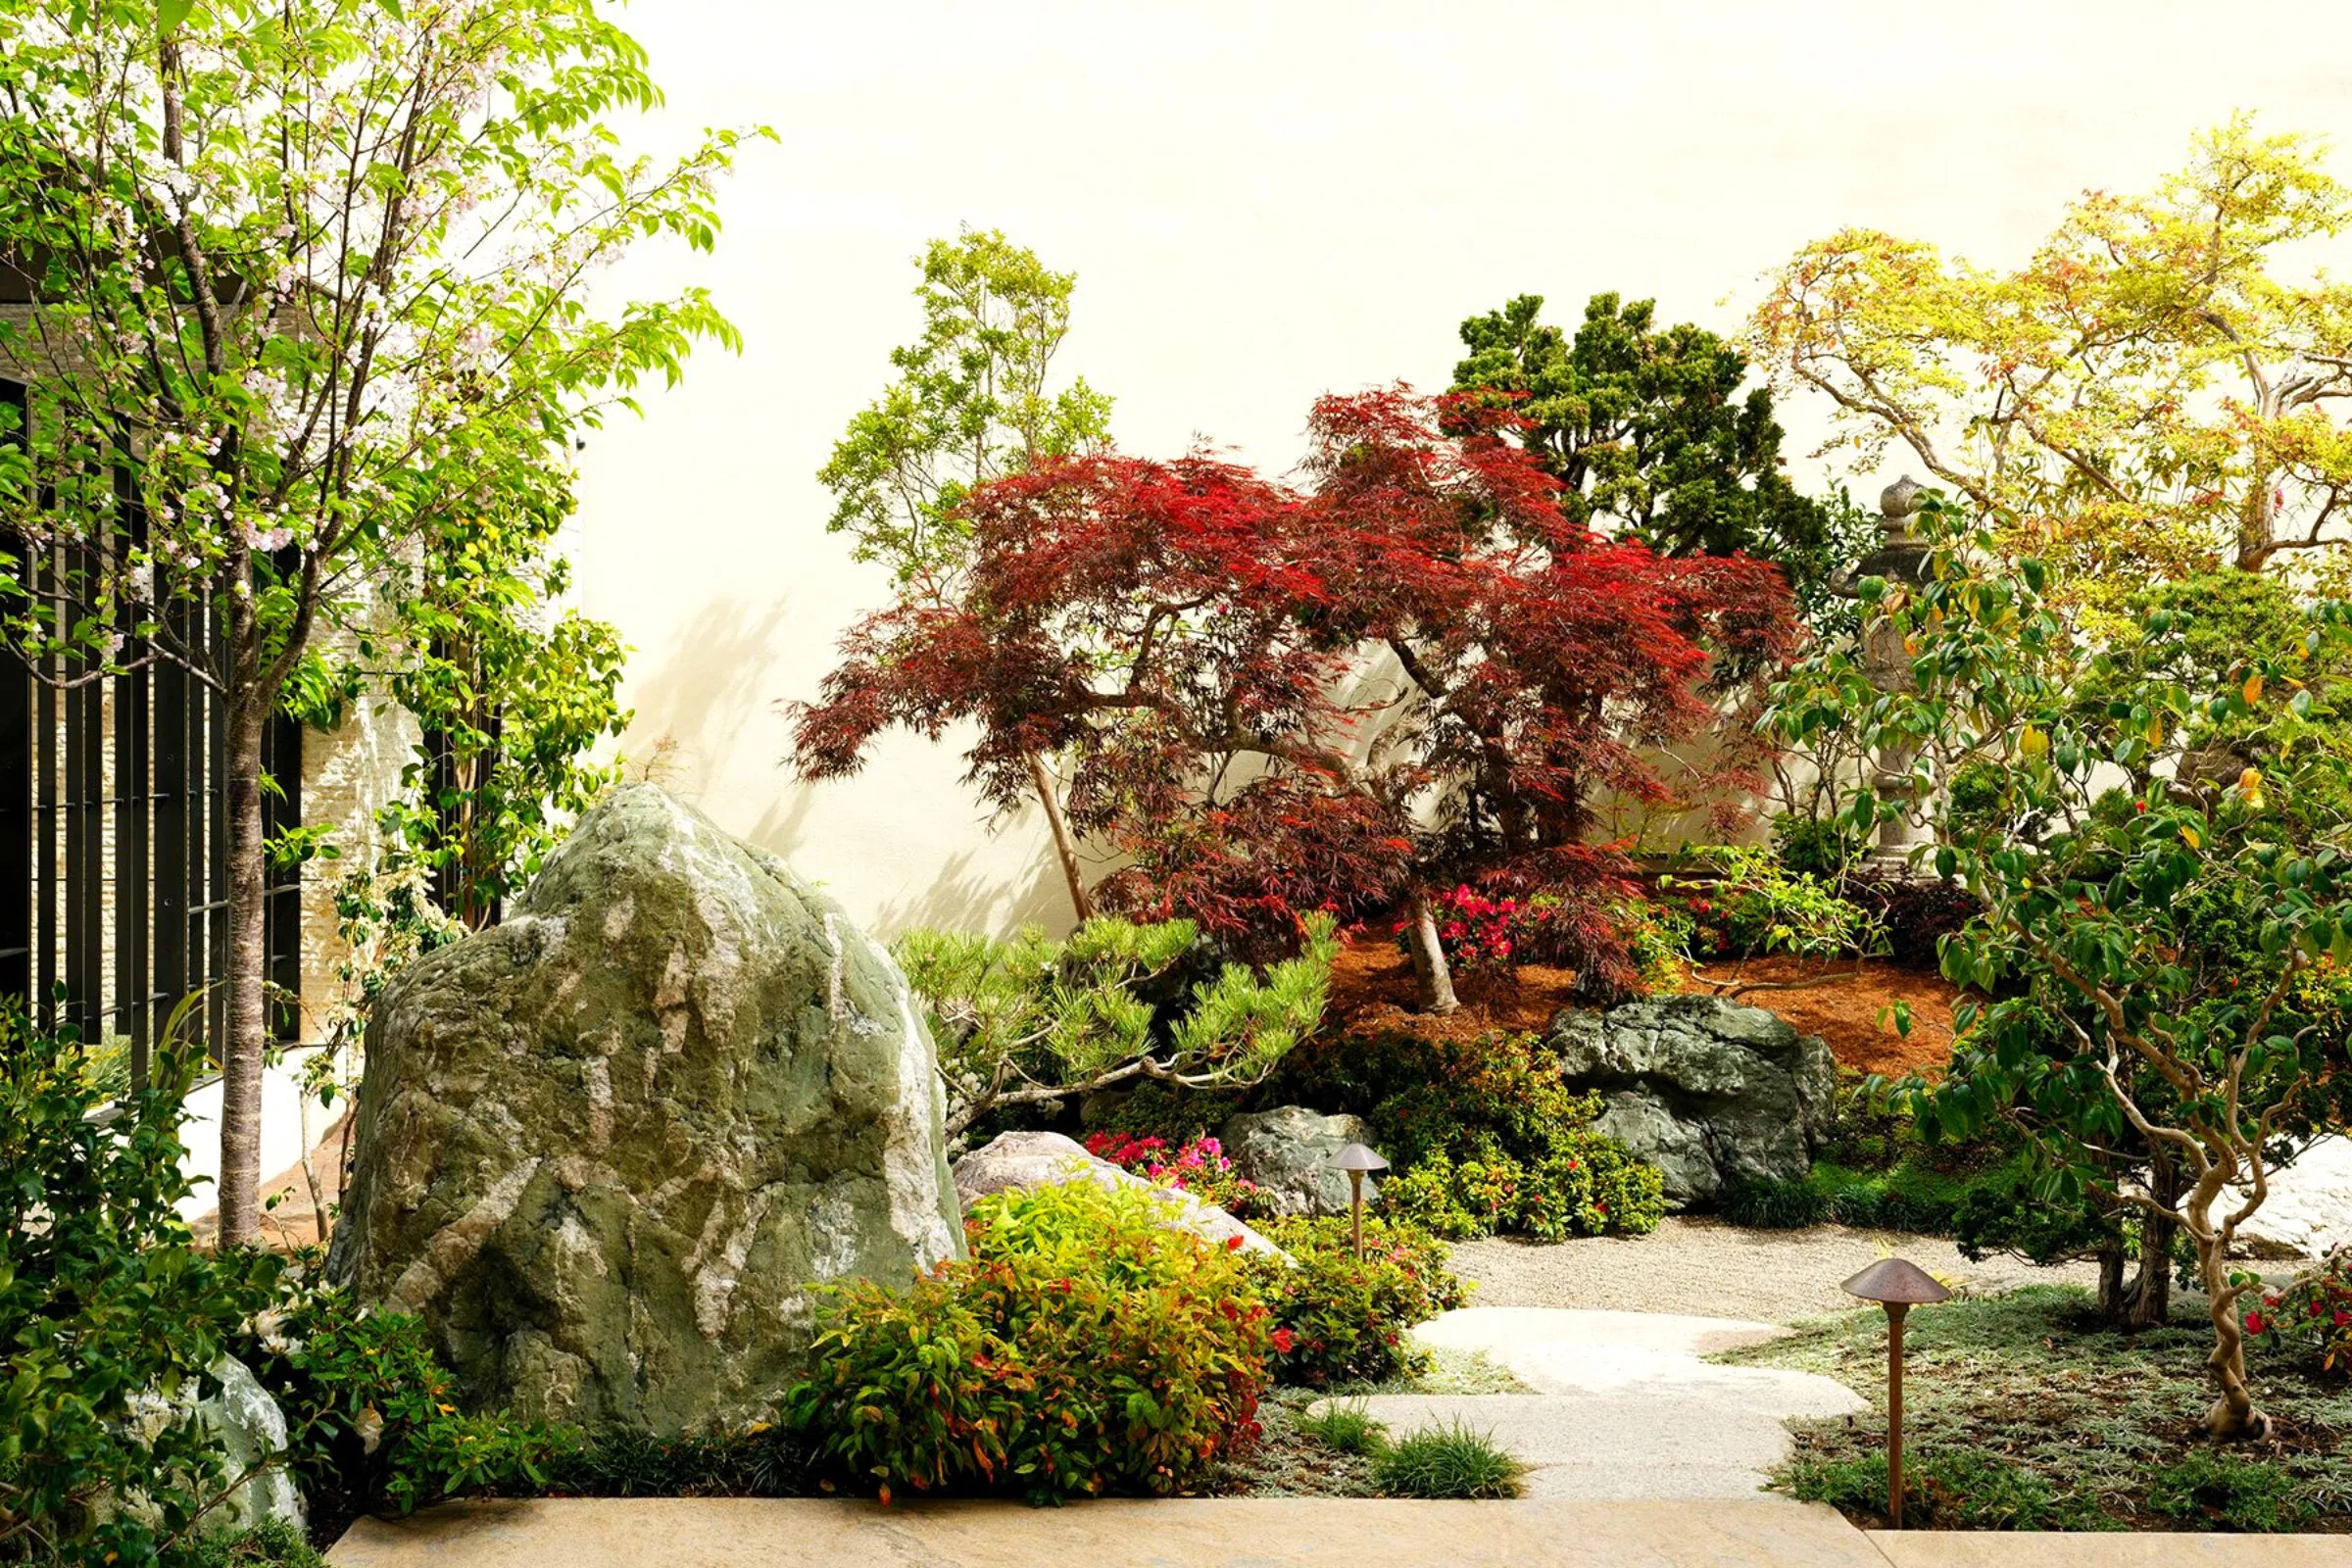 Nobu Hotel garden